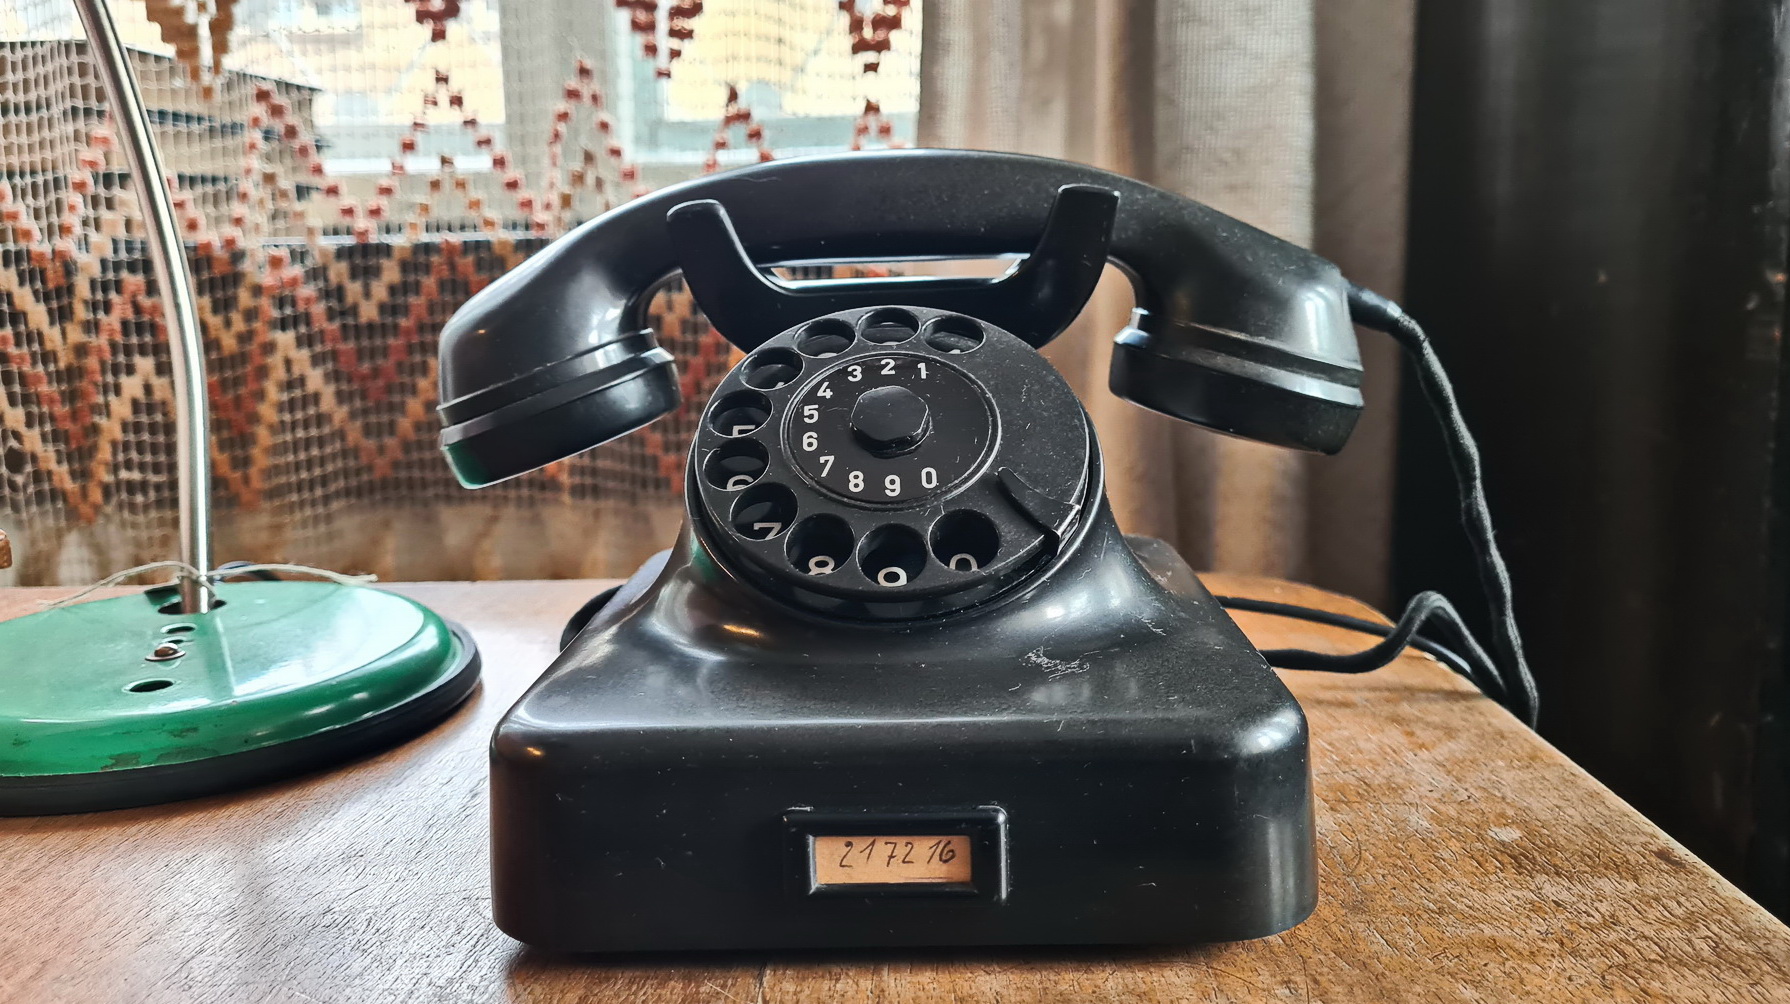 Senas telefonas | Alkas.lt, A. Sartanavičiaus nuotr.